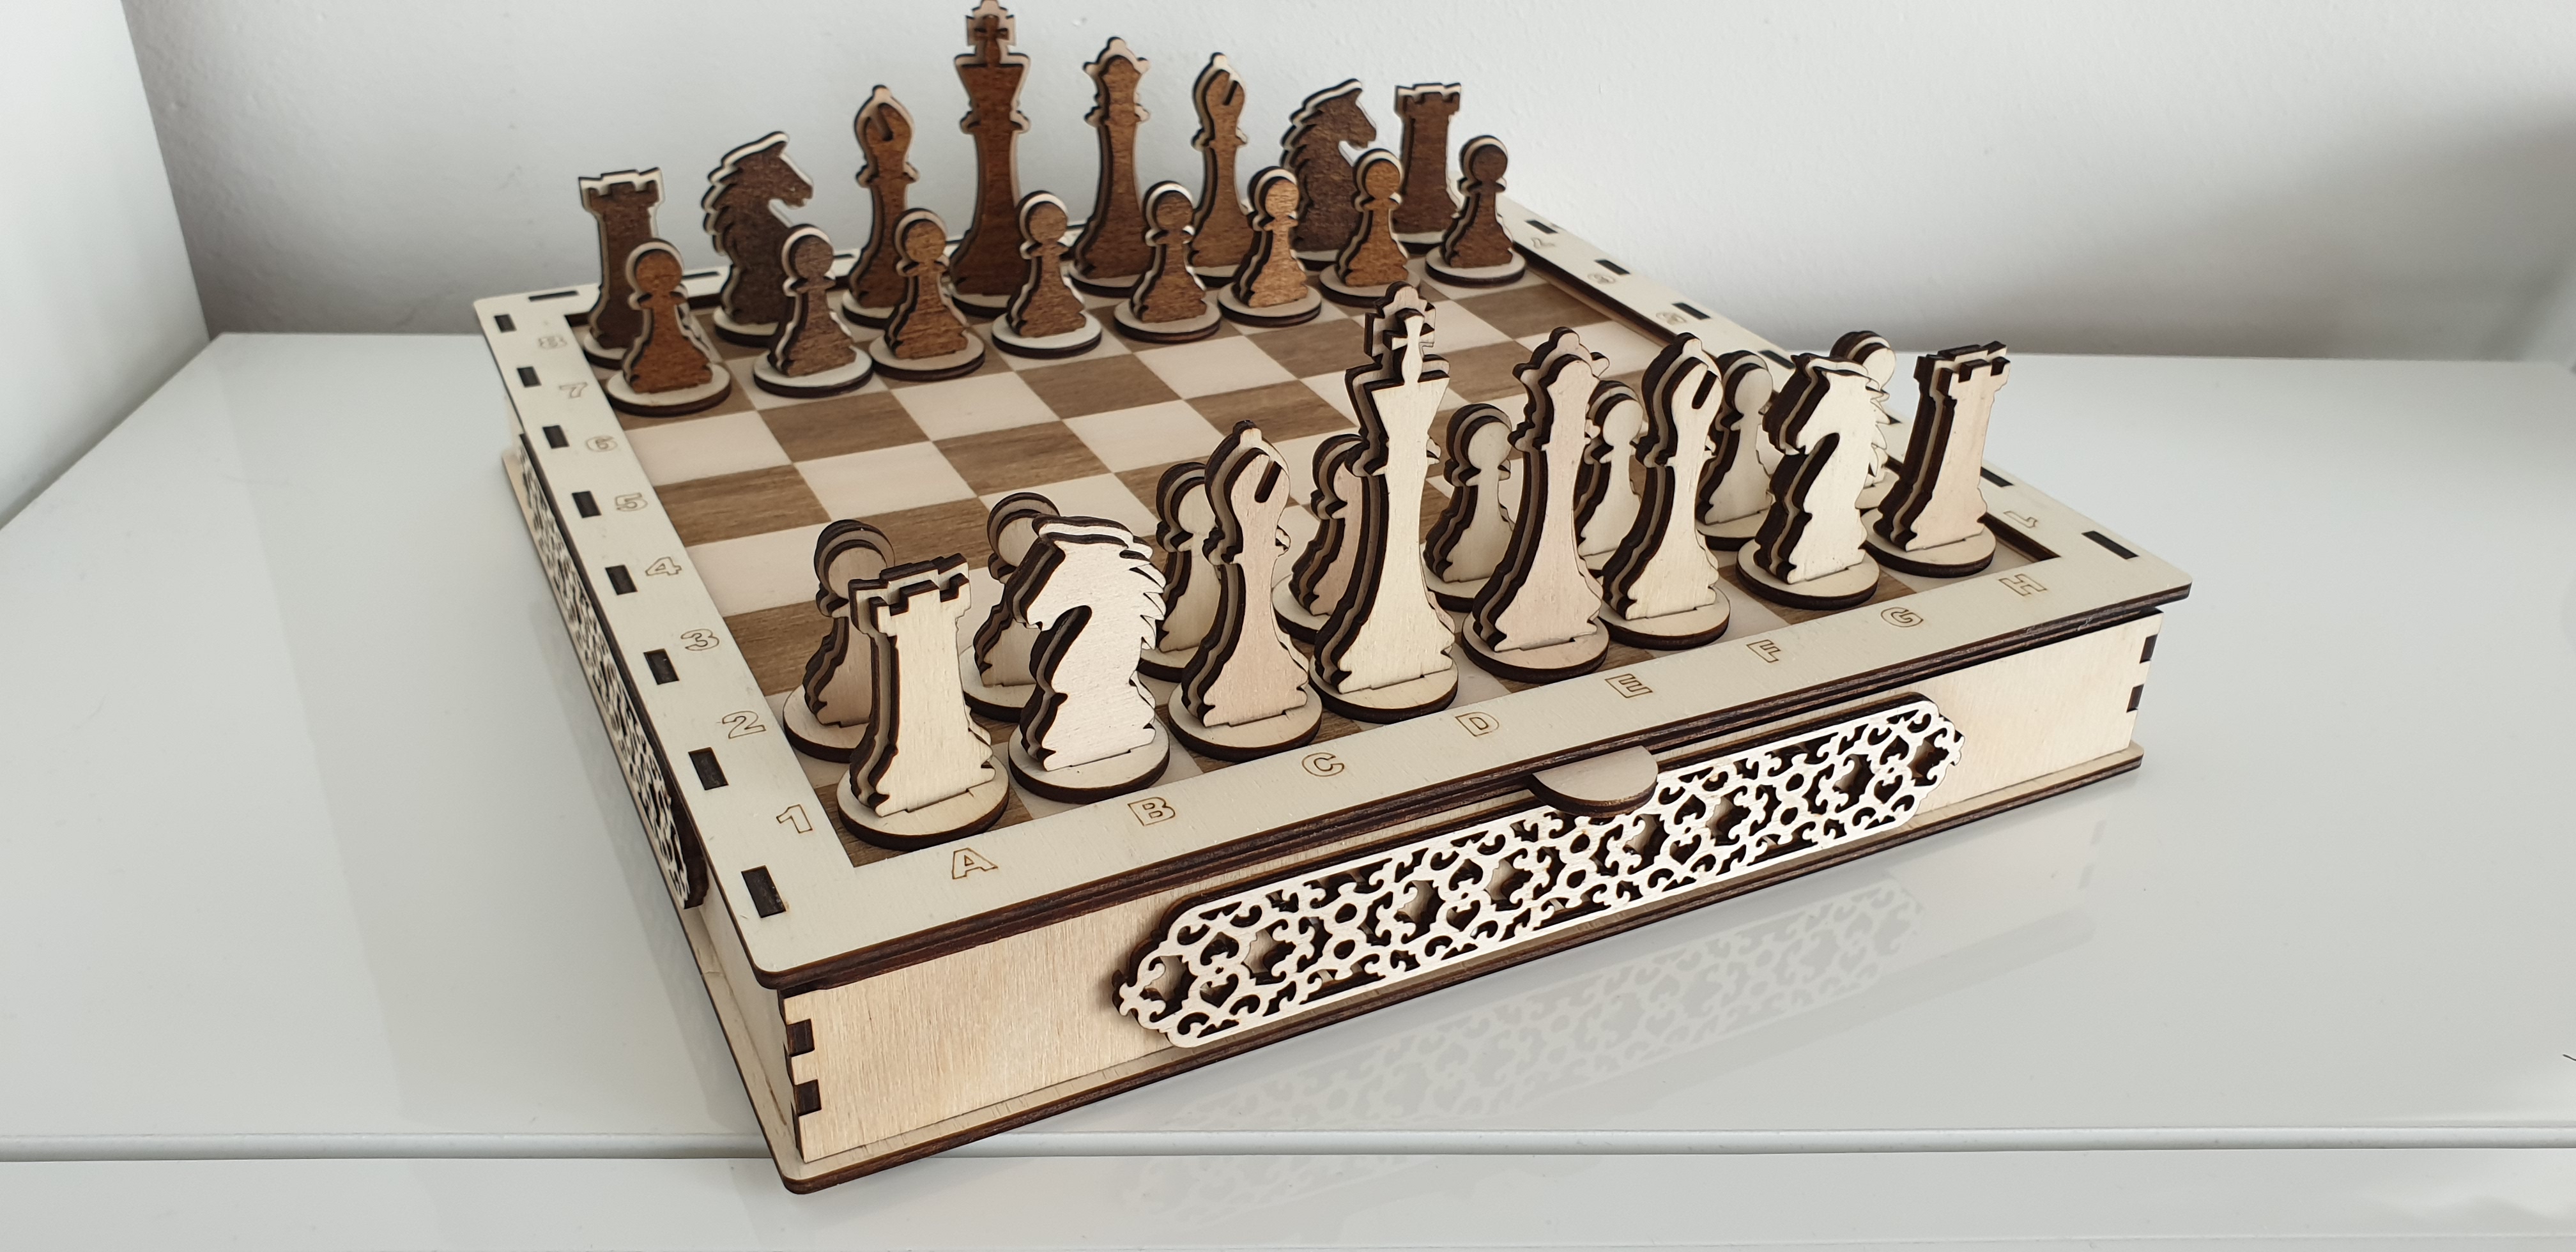 Chess Pieces · Creative Fabrica